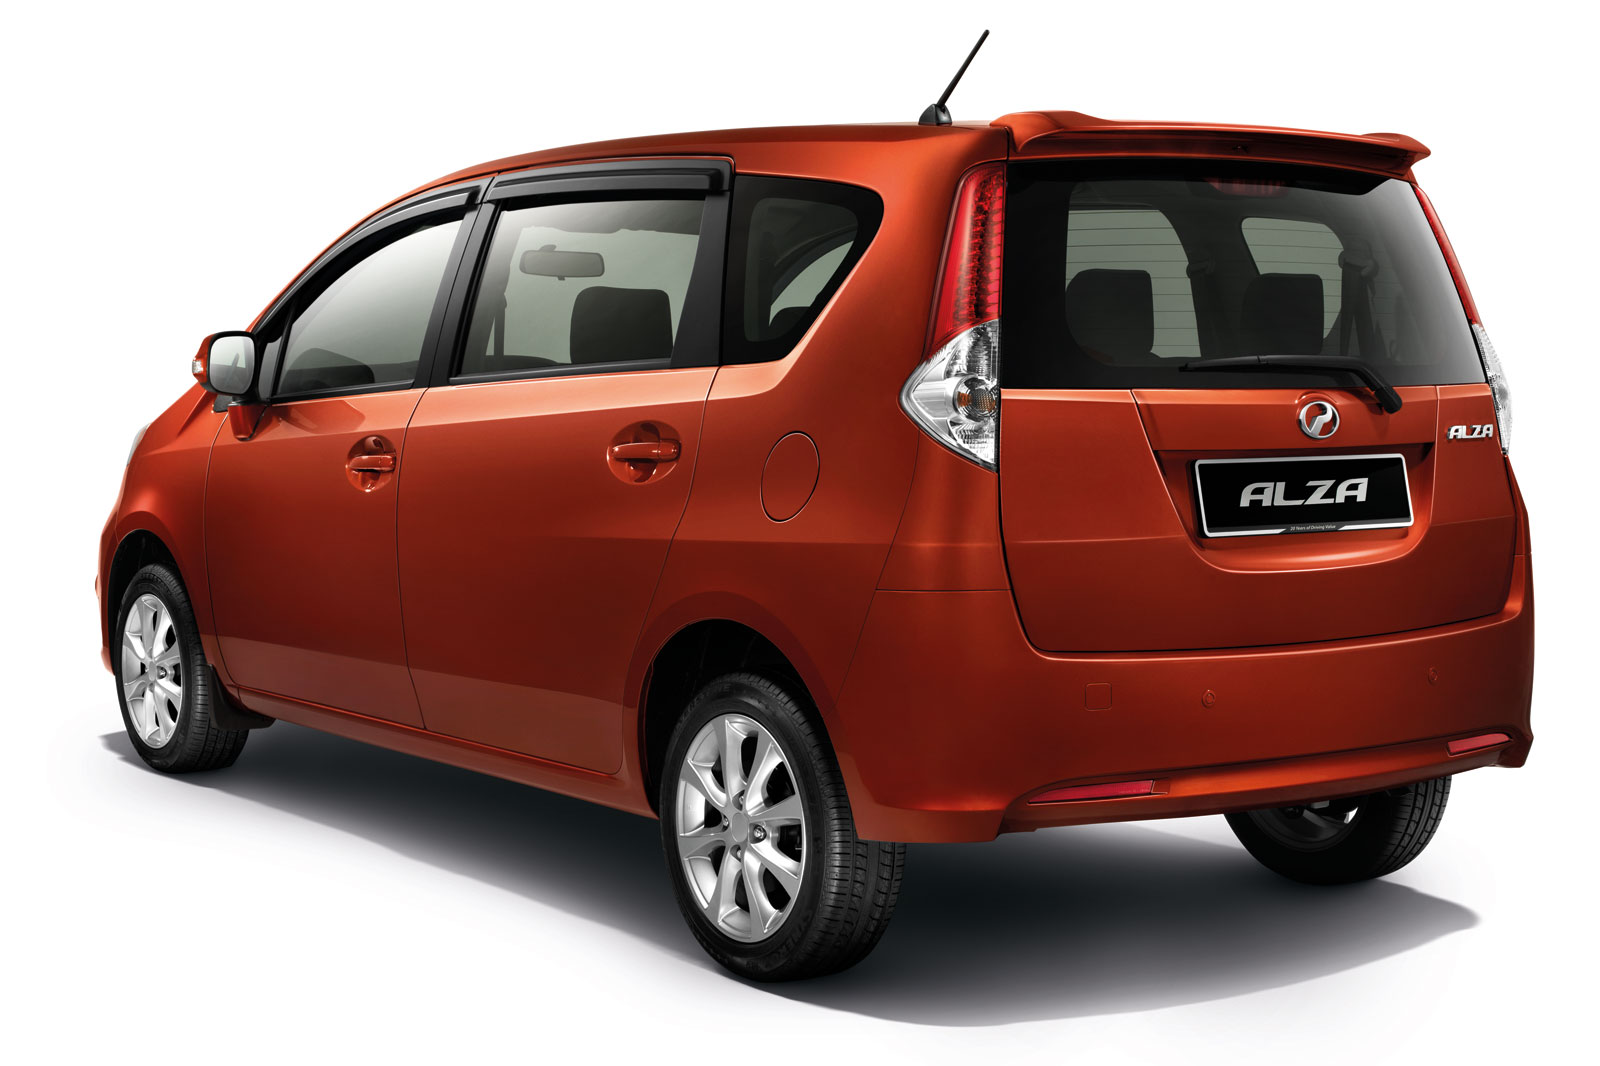 Perodua launches S-Series Viva, Myvi and Alza – all 